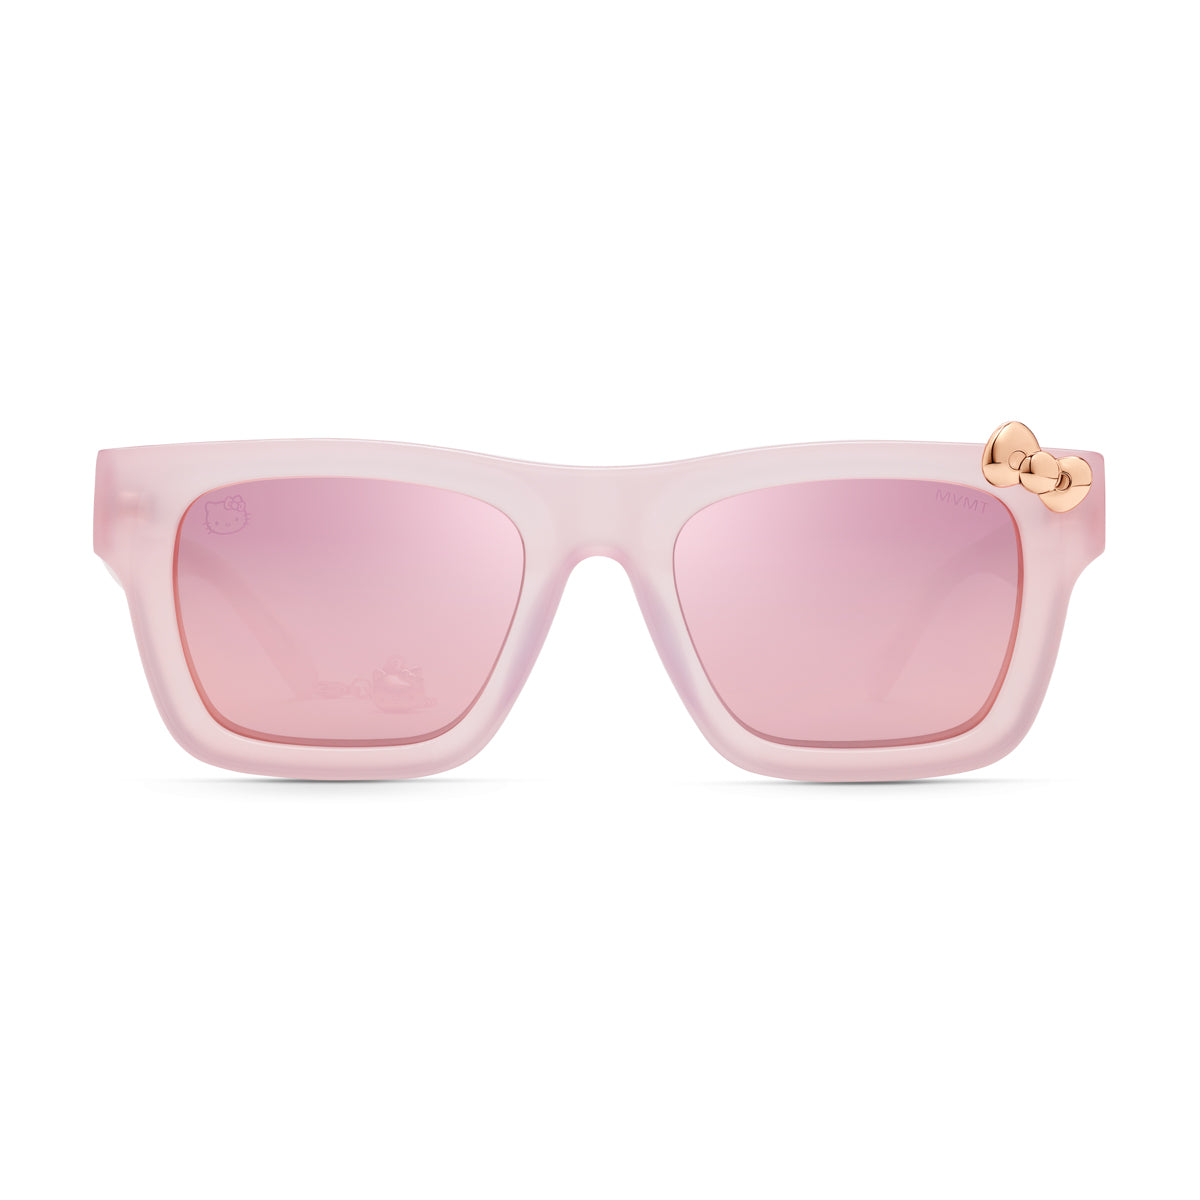 Hello Kitty x MVMT Trap Sunglasses (Petal Blush) Accessory Movado Group (MVMT)   